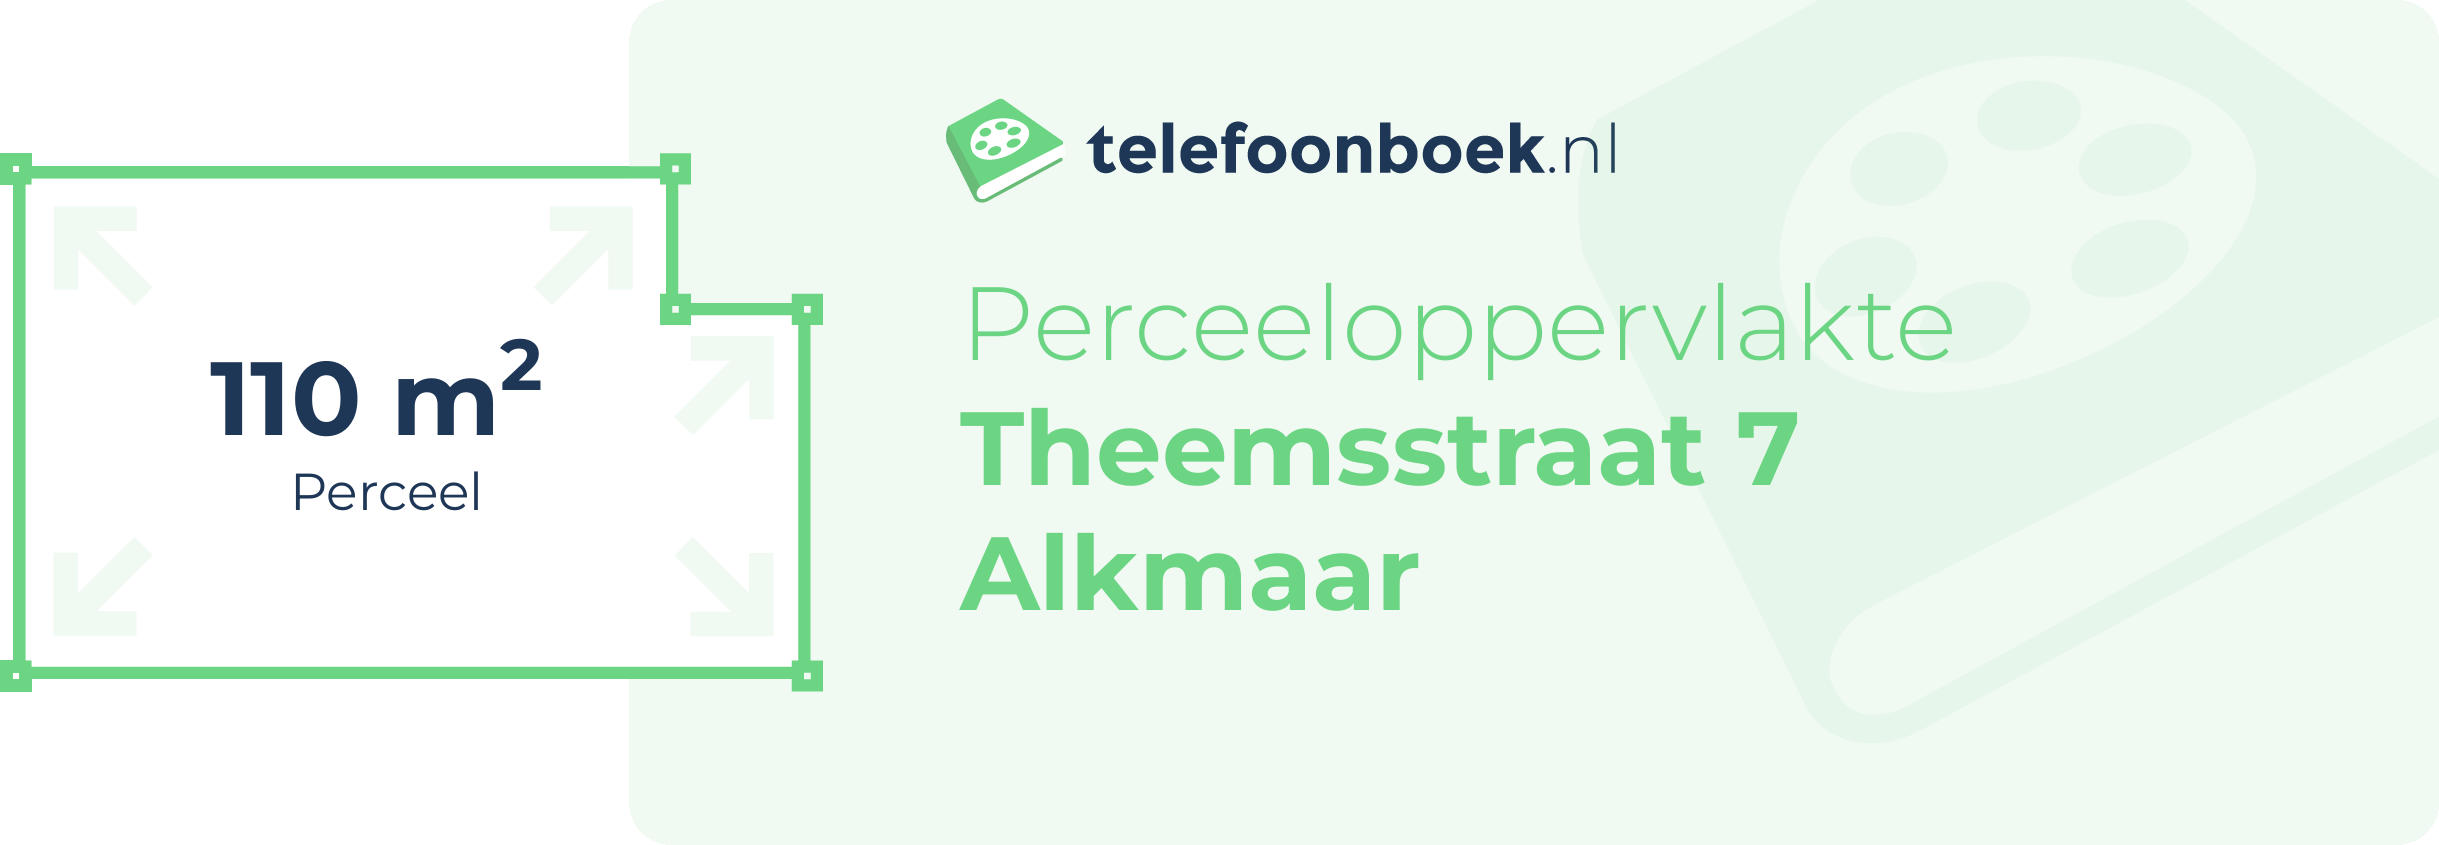 Perceeloppervlakte Theemsstraat 7 Alkmaar